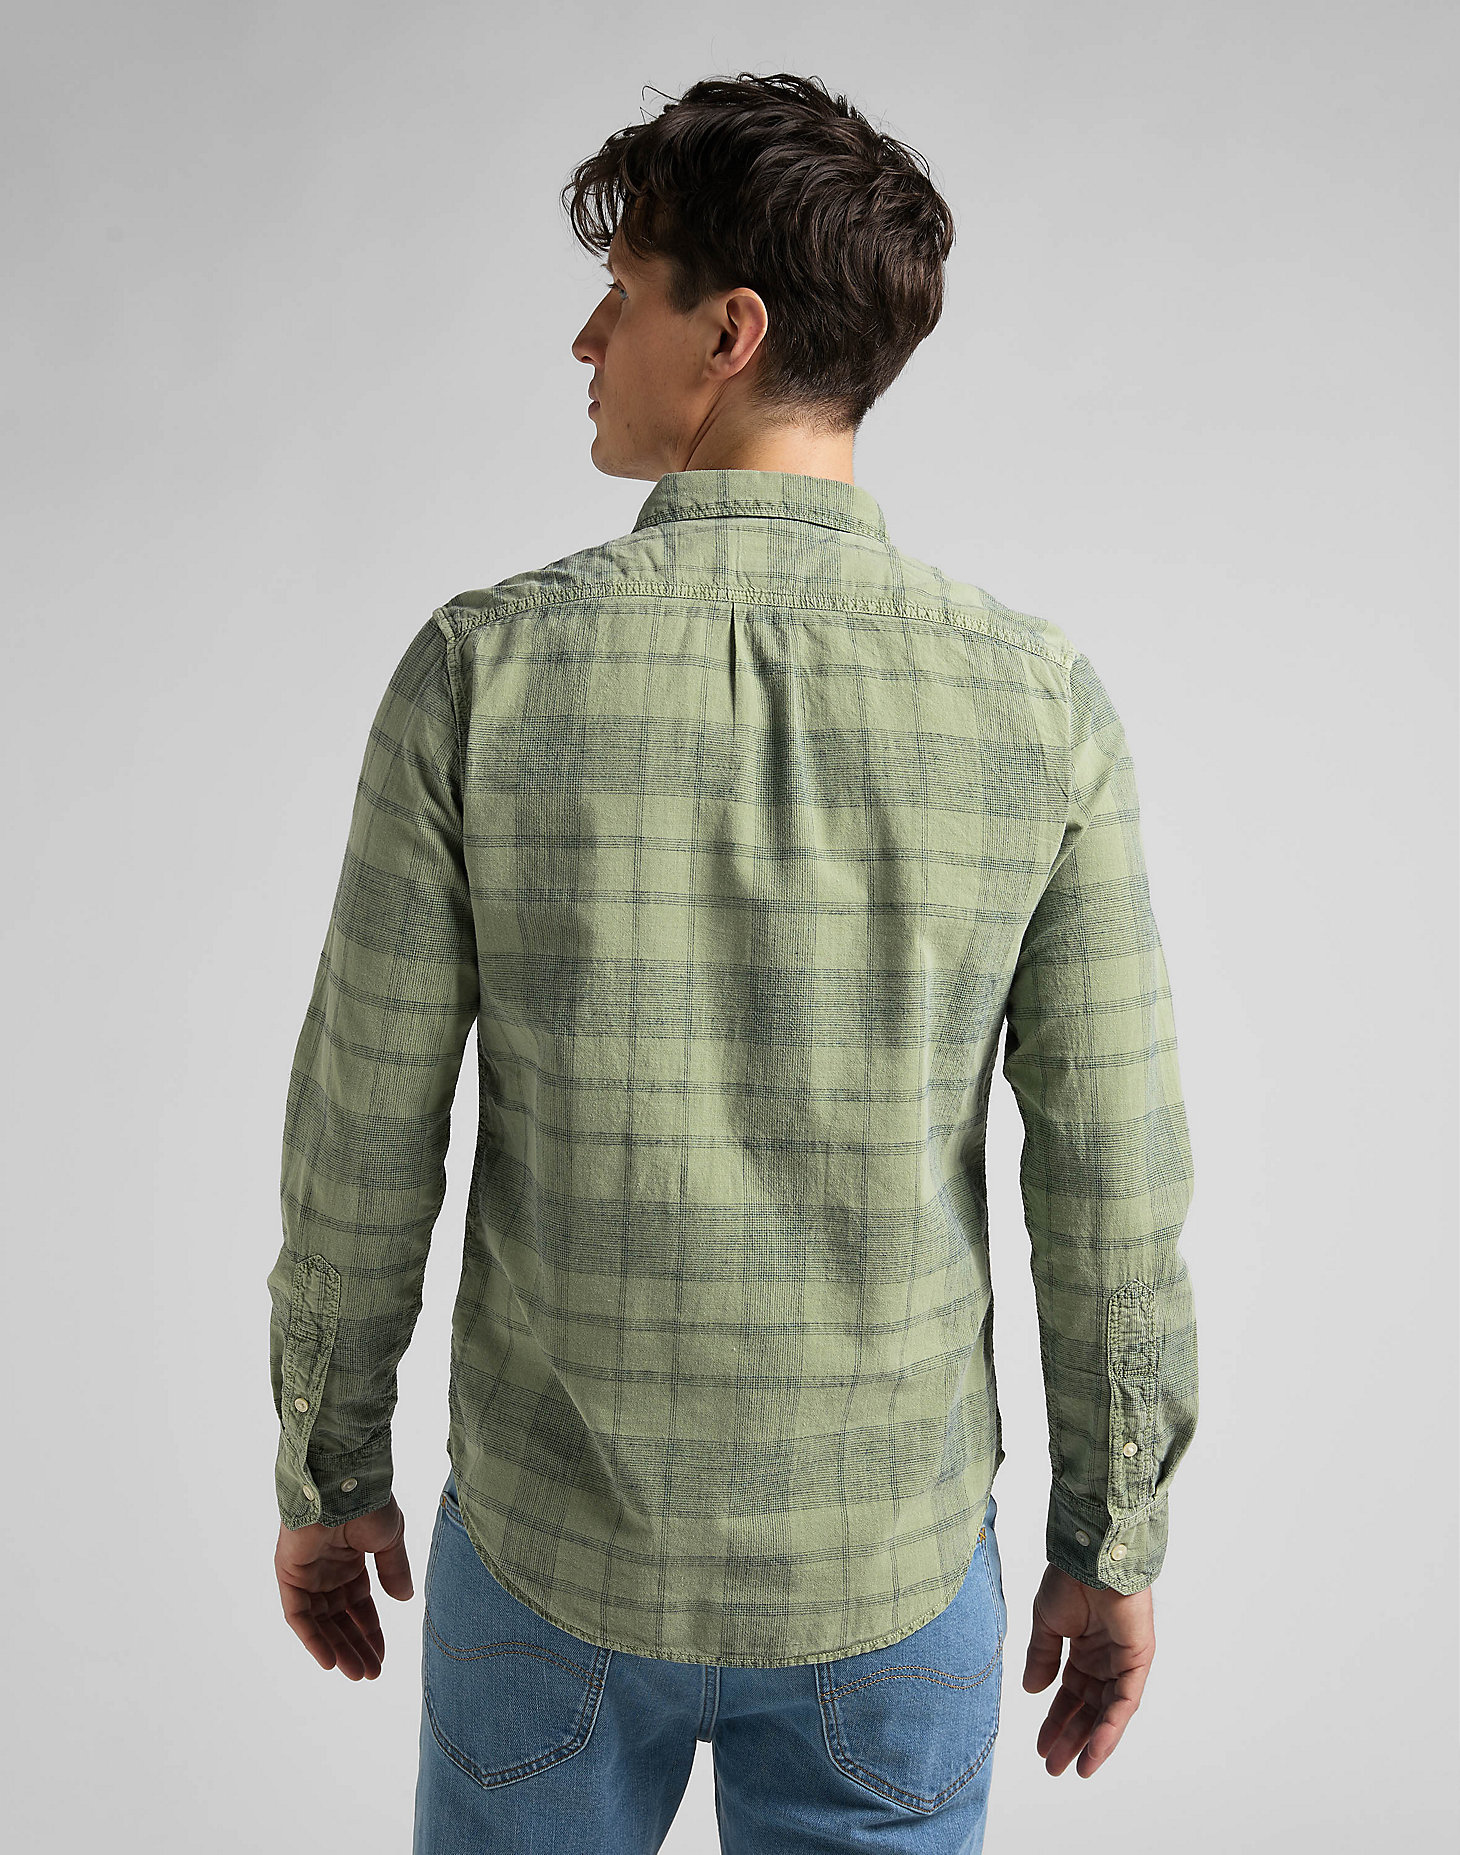 Leesure Shirt in Brindle Green Check alternative view 1